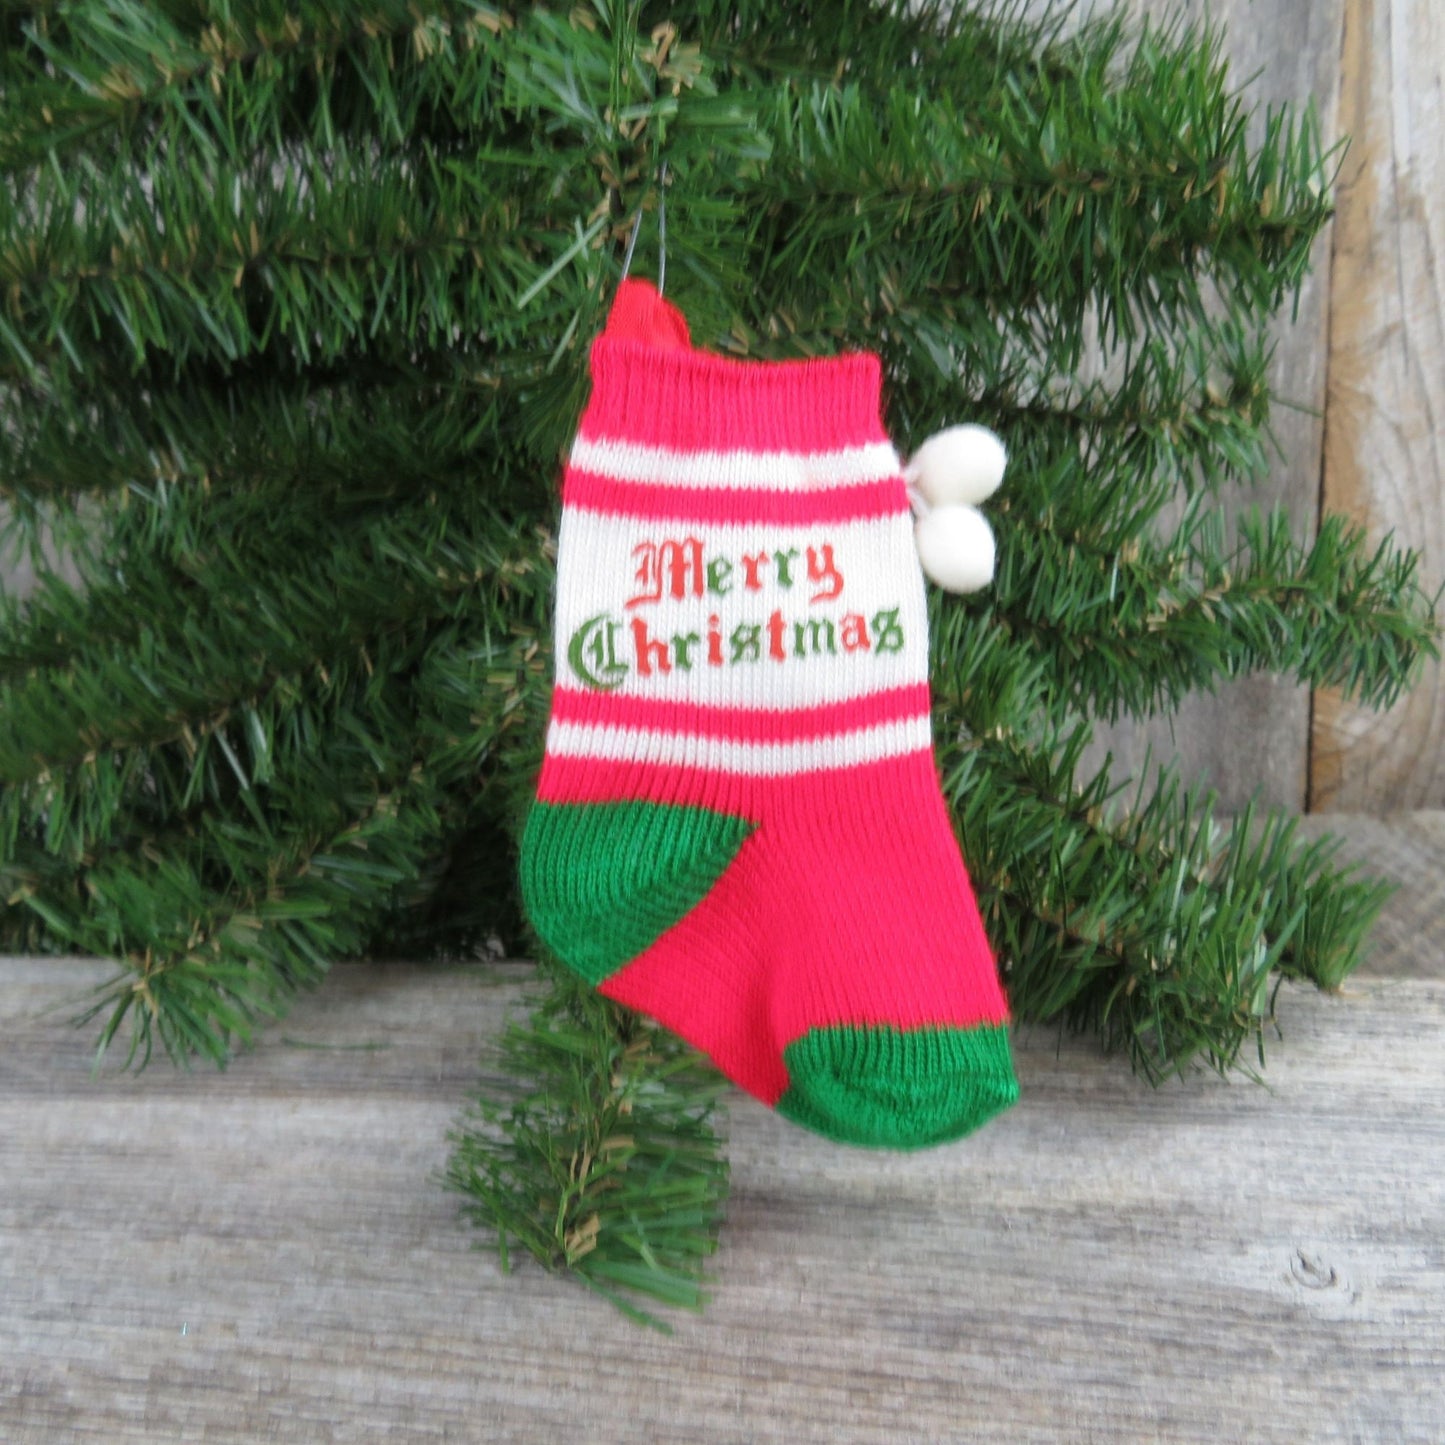 Vintage Knit Stocking Ornament Merry Christmas Striped Red White Green Pom Pom